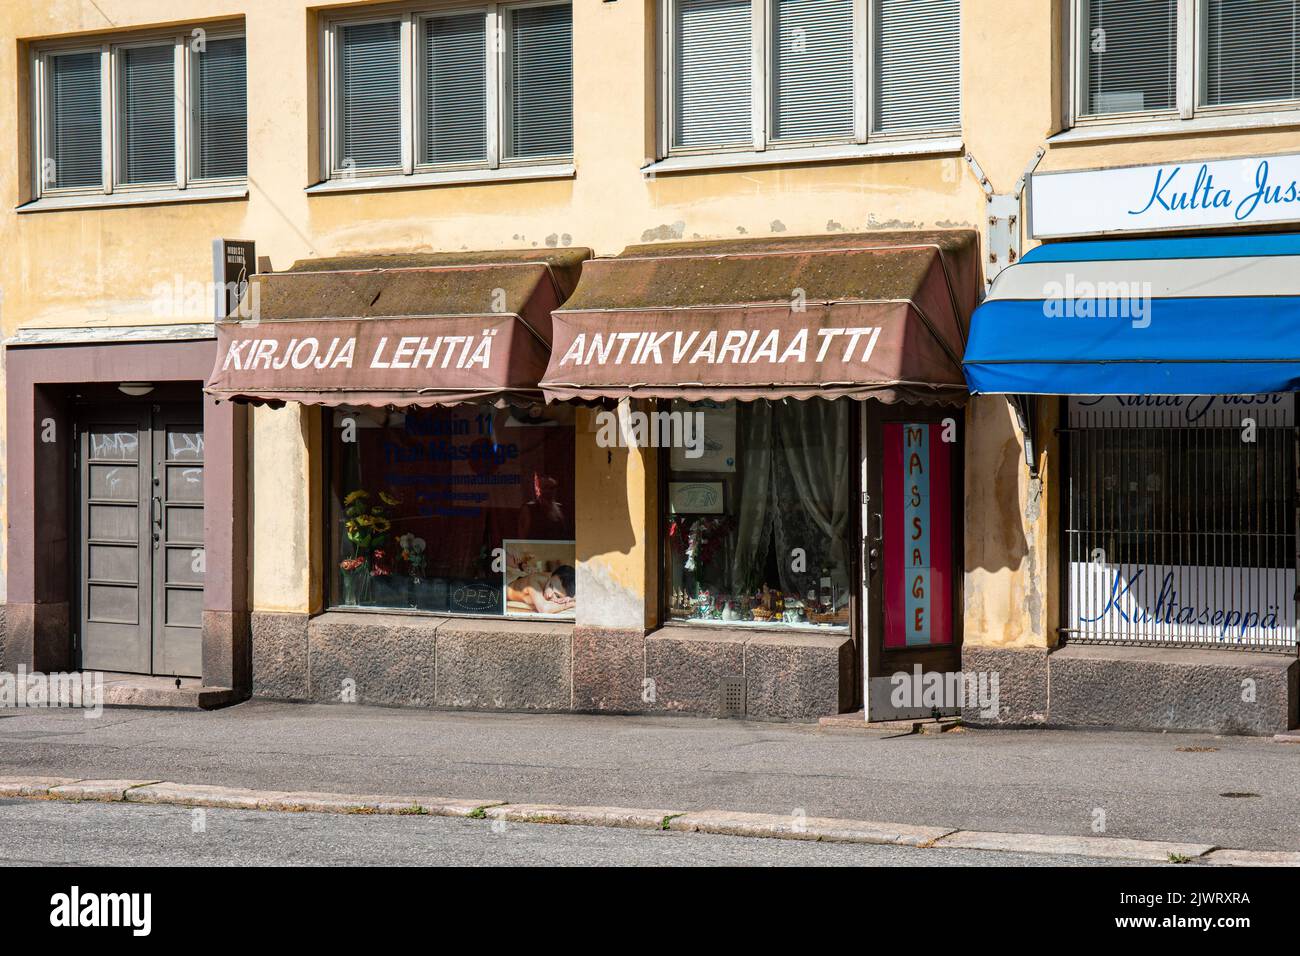 Thai massage parlour in an old antiquarian bookshop in Alppila district of Helsinki, Finland Stock Photo